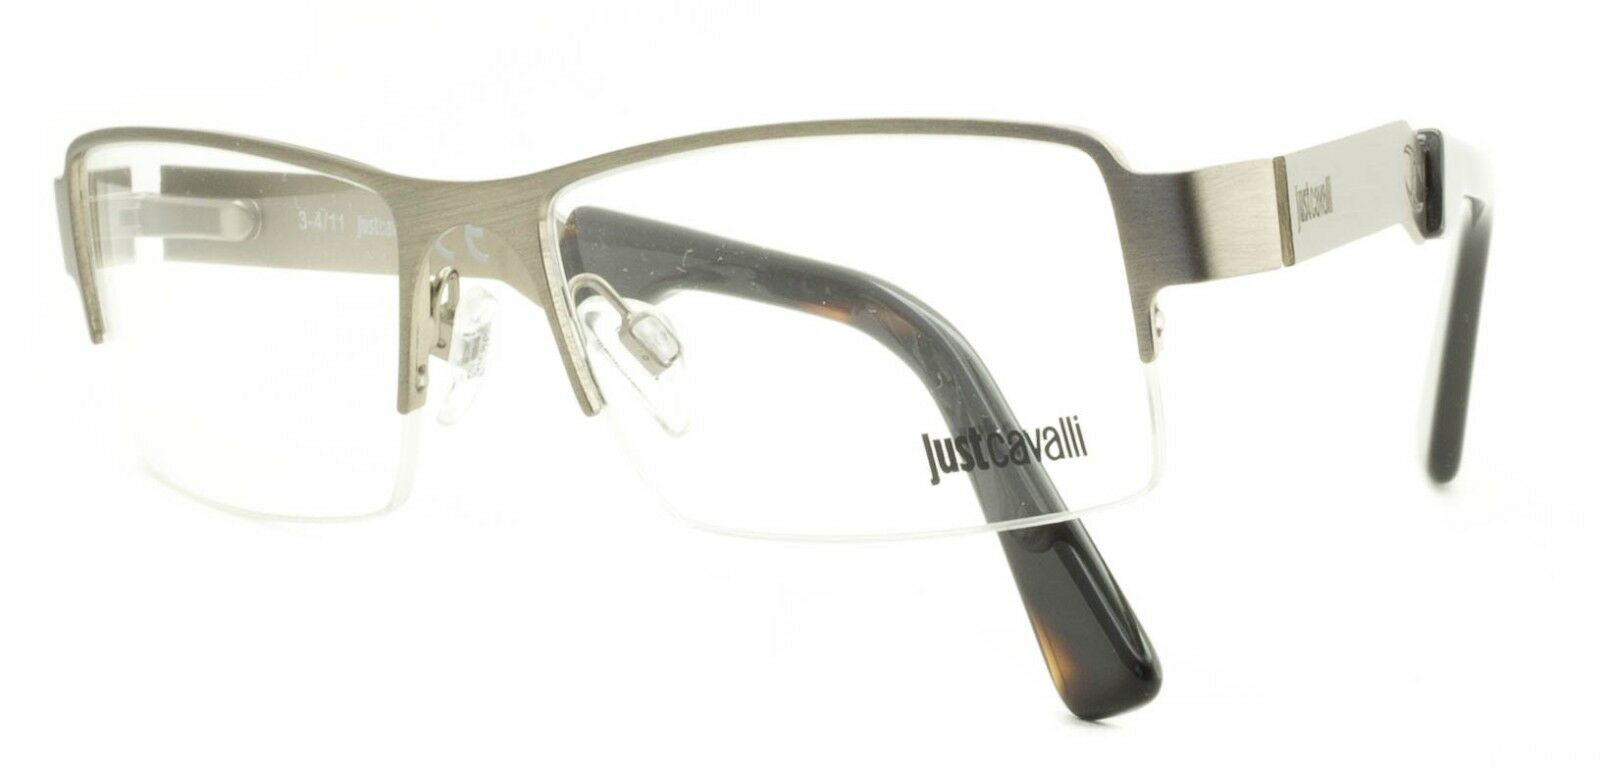 JUST CAVALLI JC450 col 048 FRAMES NEW Glasses RX Optical Eyewear Eyeglasses-BNIB